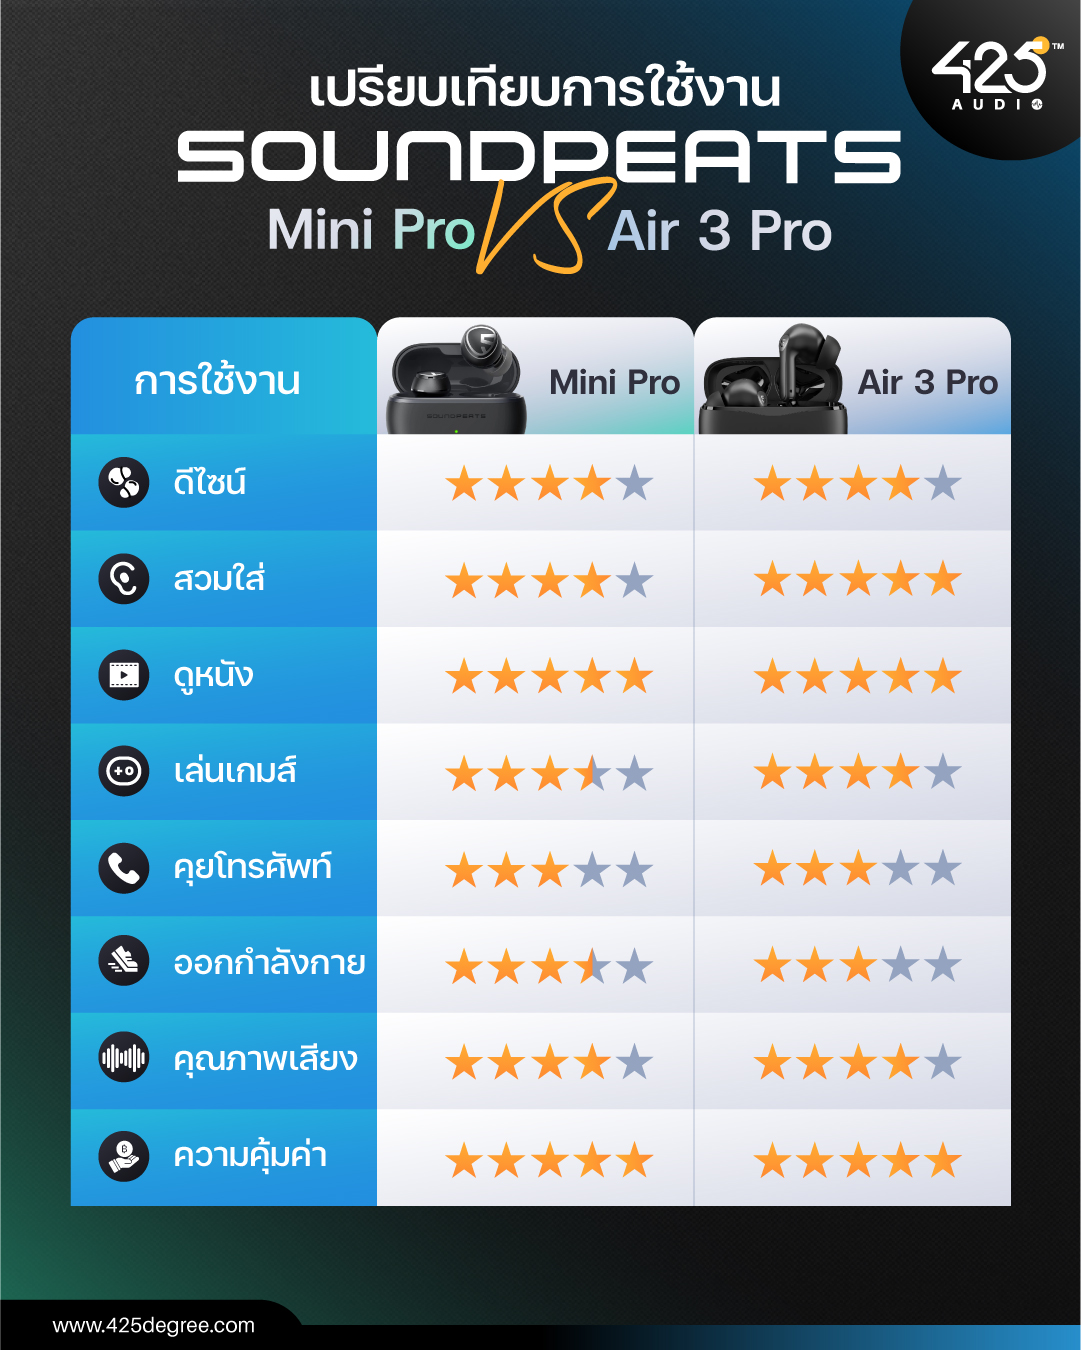 SoundPEATS Air 3 Pro,true wireless,หูฟังไร้สาย,inear,หูฟังบลูทูธ,สวมใส่สบาย,ต่างกันยังไง,ดีไหม